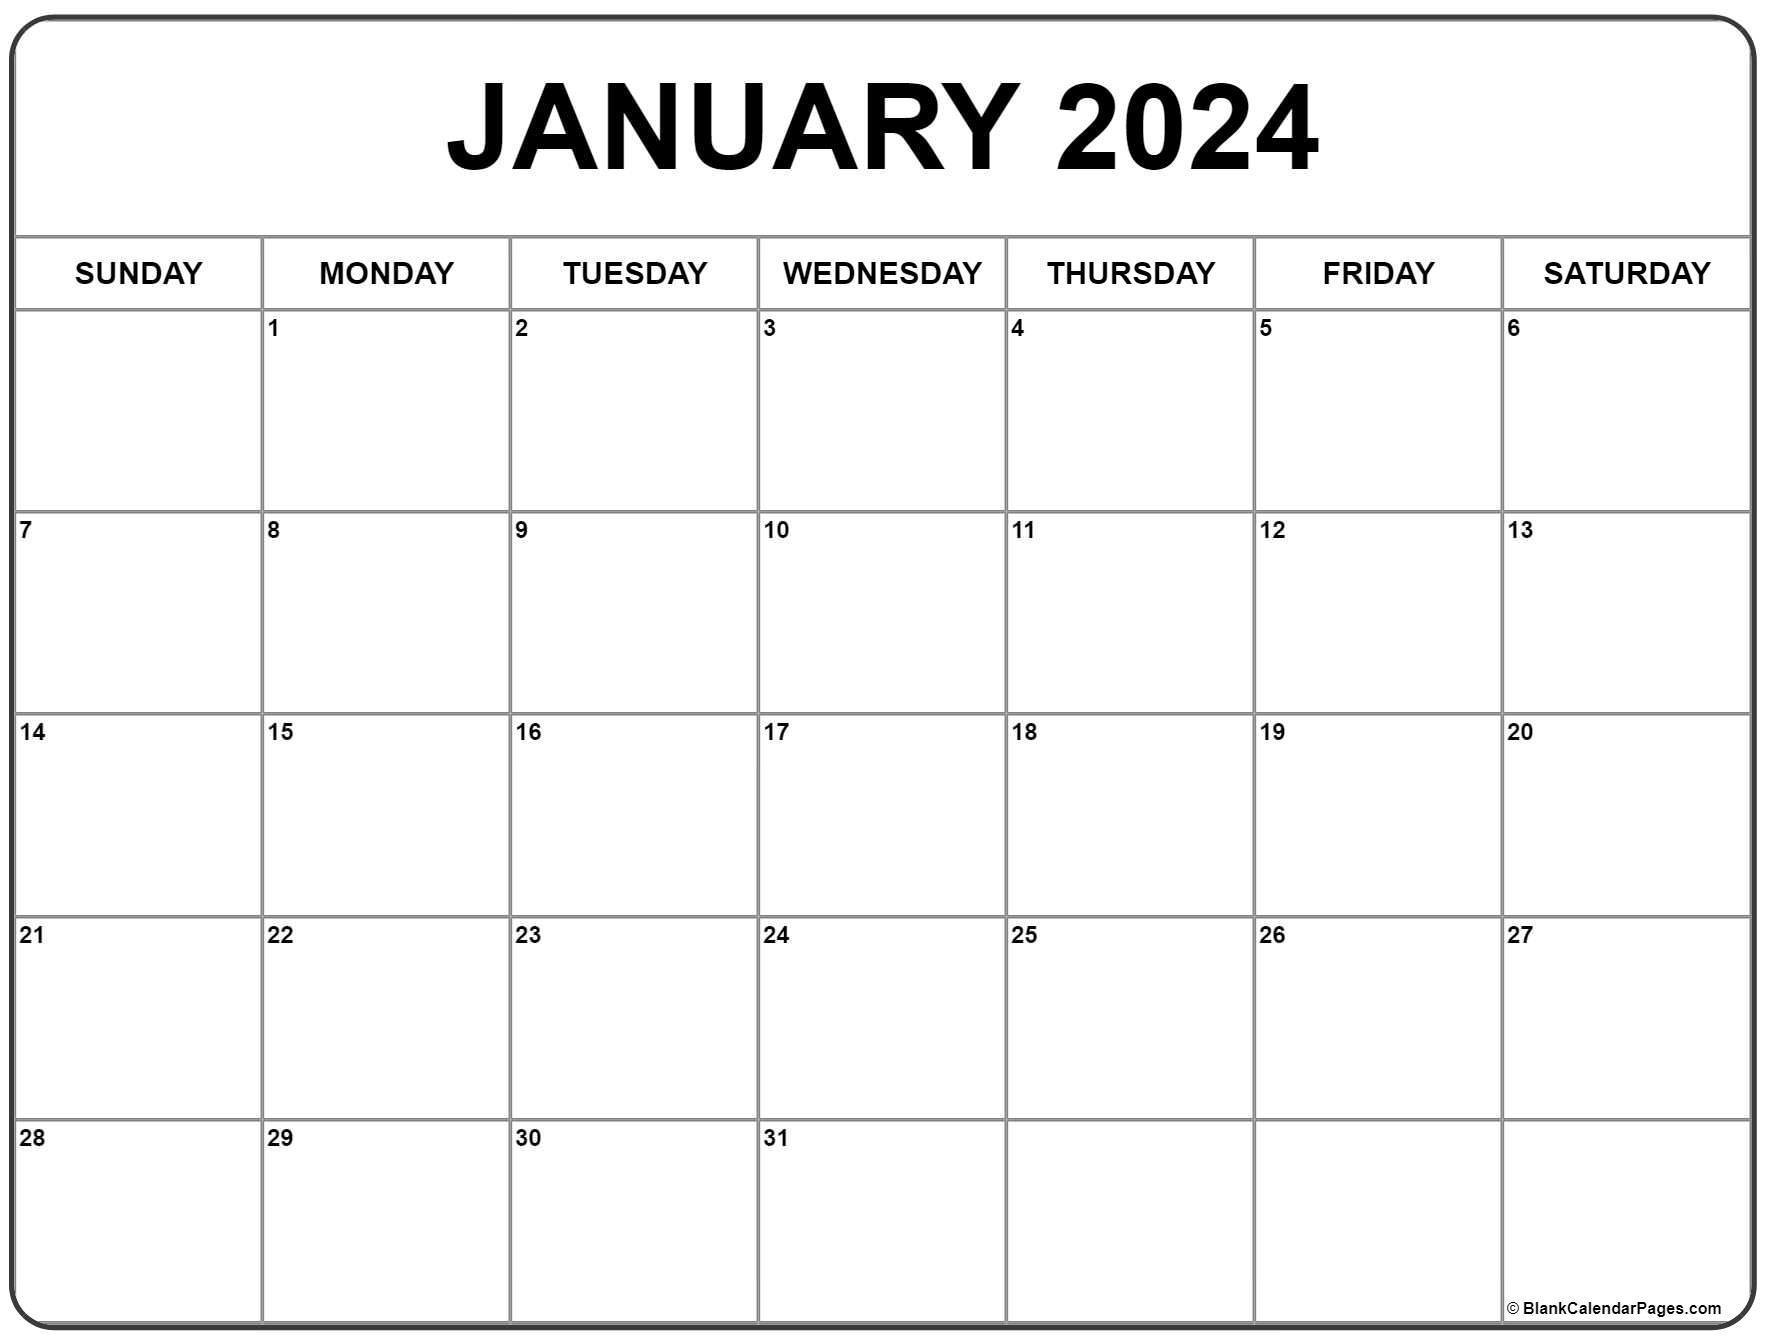 January 2024 Calendar | Free Printable Calendar pertaining to Free Printable Blank Calendar For 2024